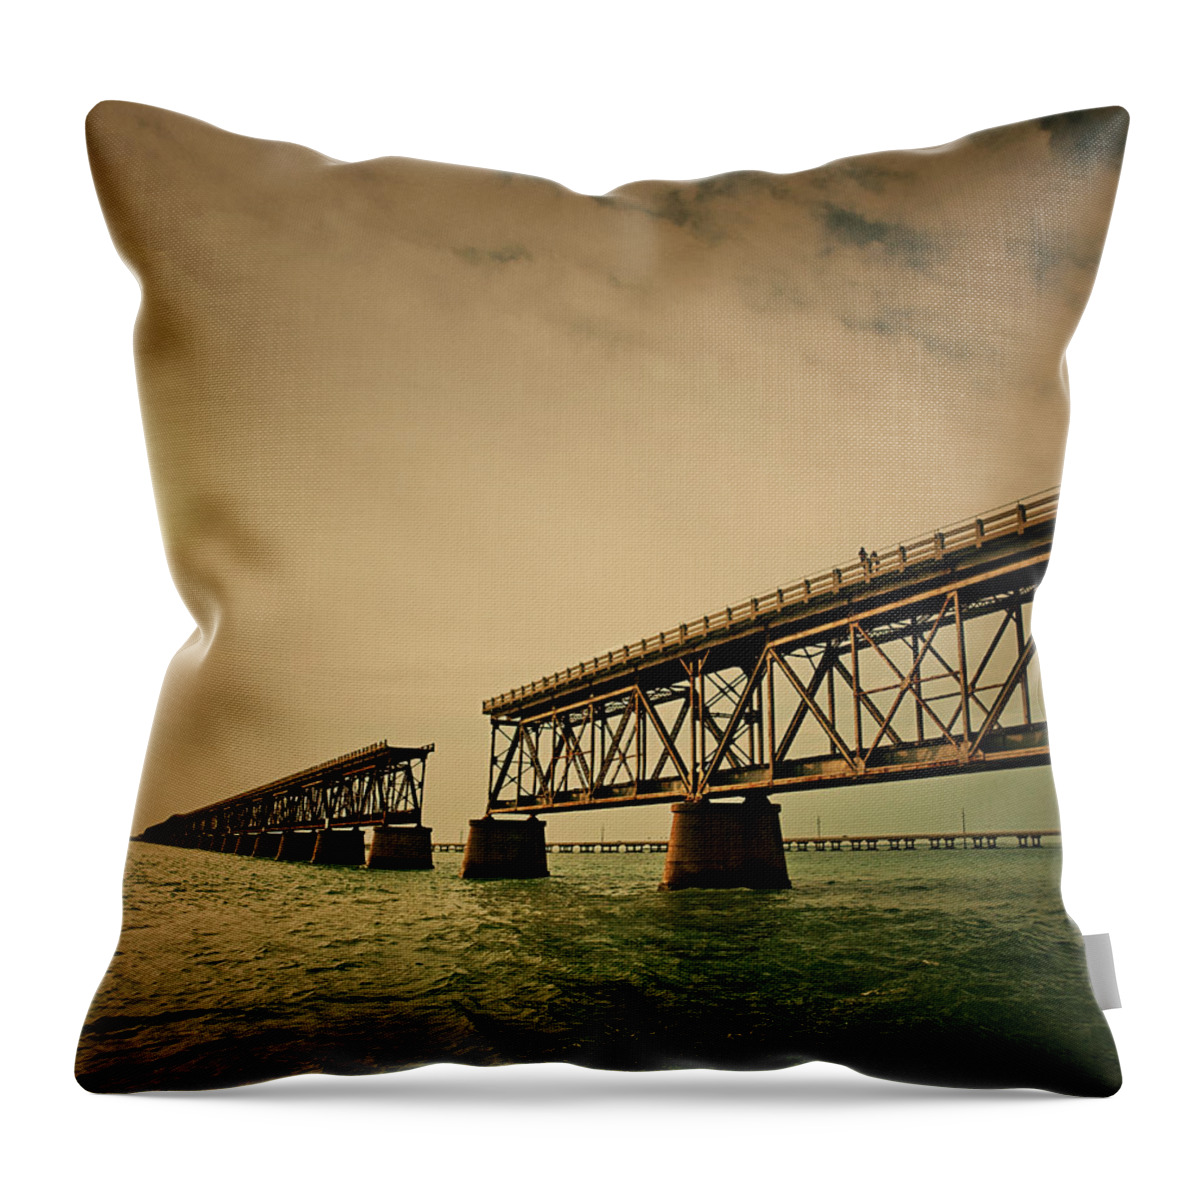 Built Structure Throw Pillow featuring the photograph The Original Bahia Honda Bridge by Thepalmer